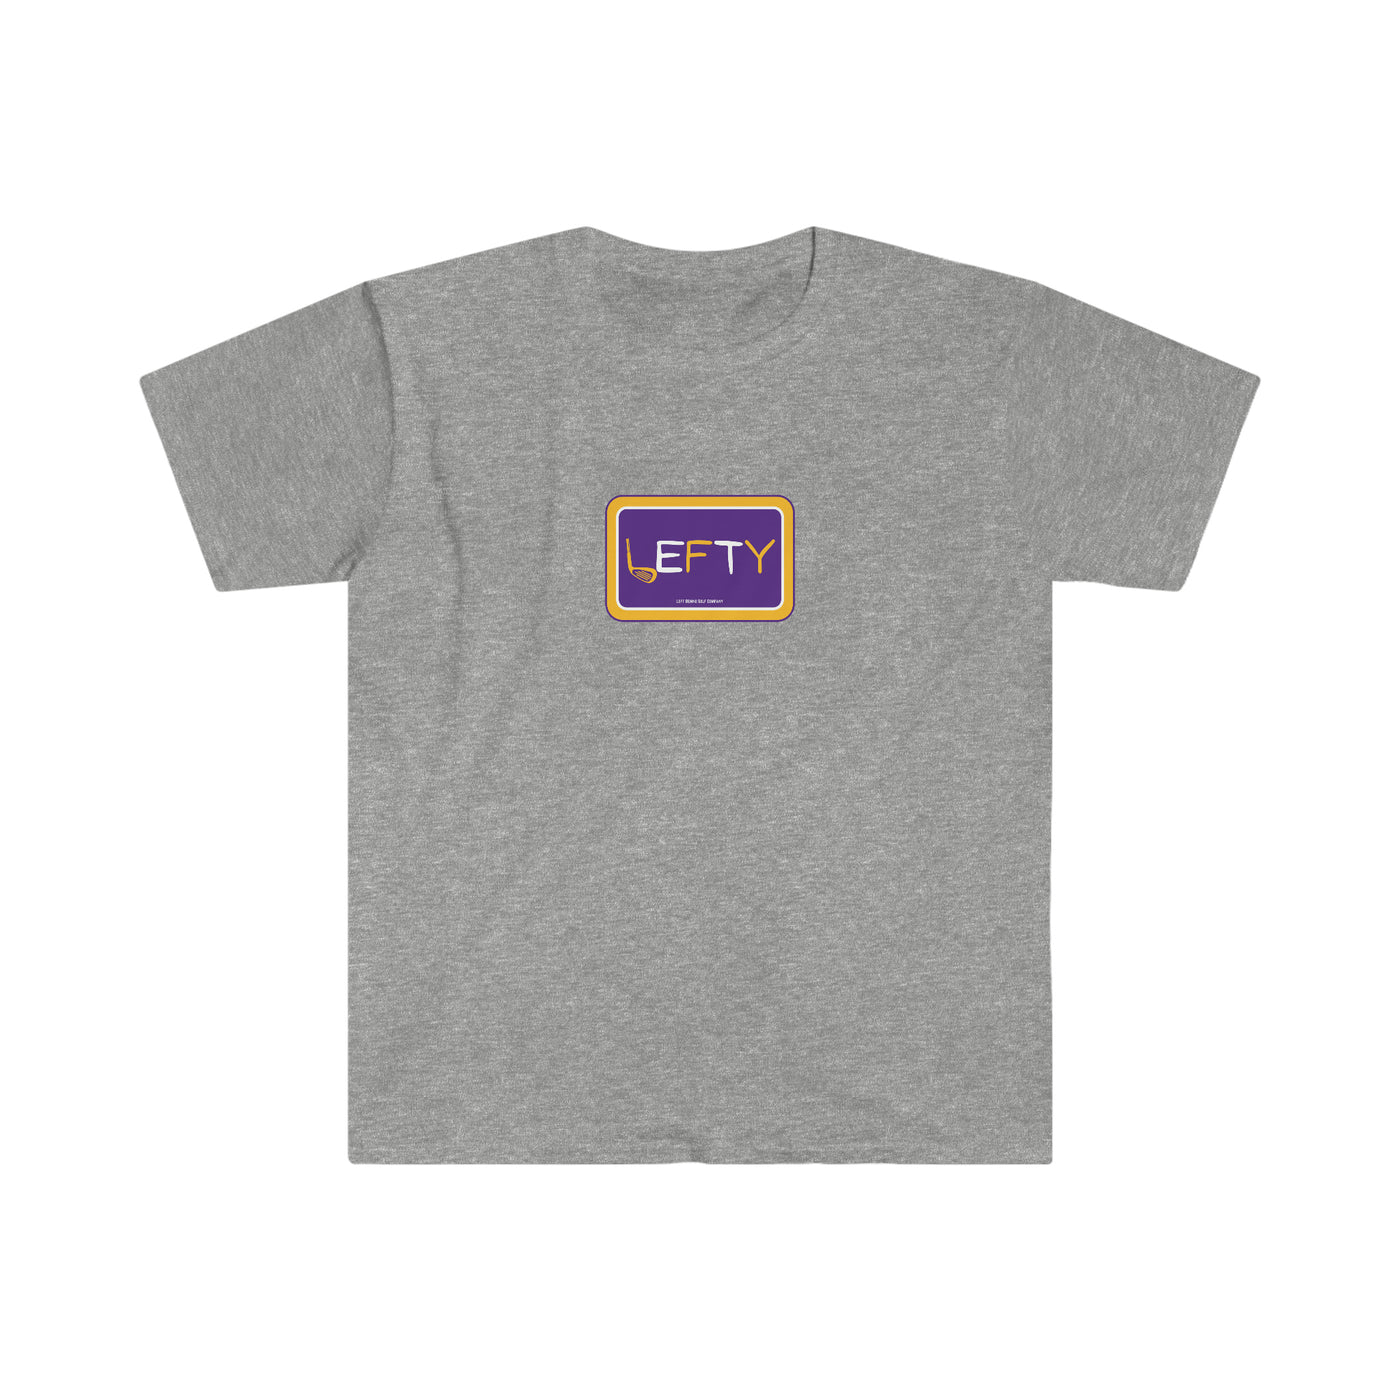 Club LEFTY T-Shirt (Dylan Jones Edition)